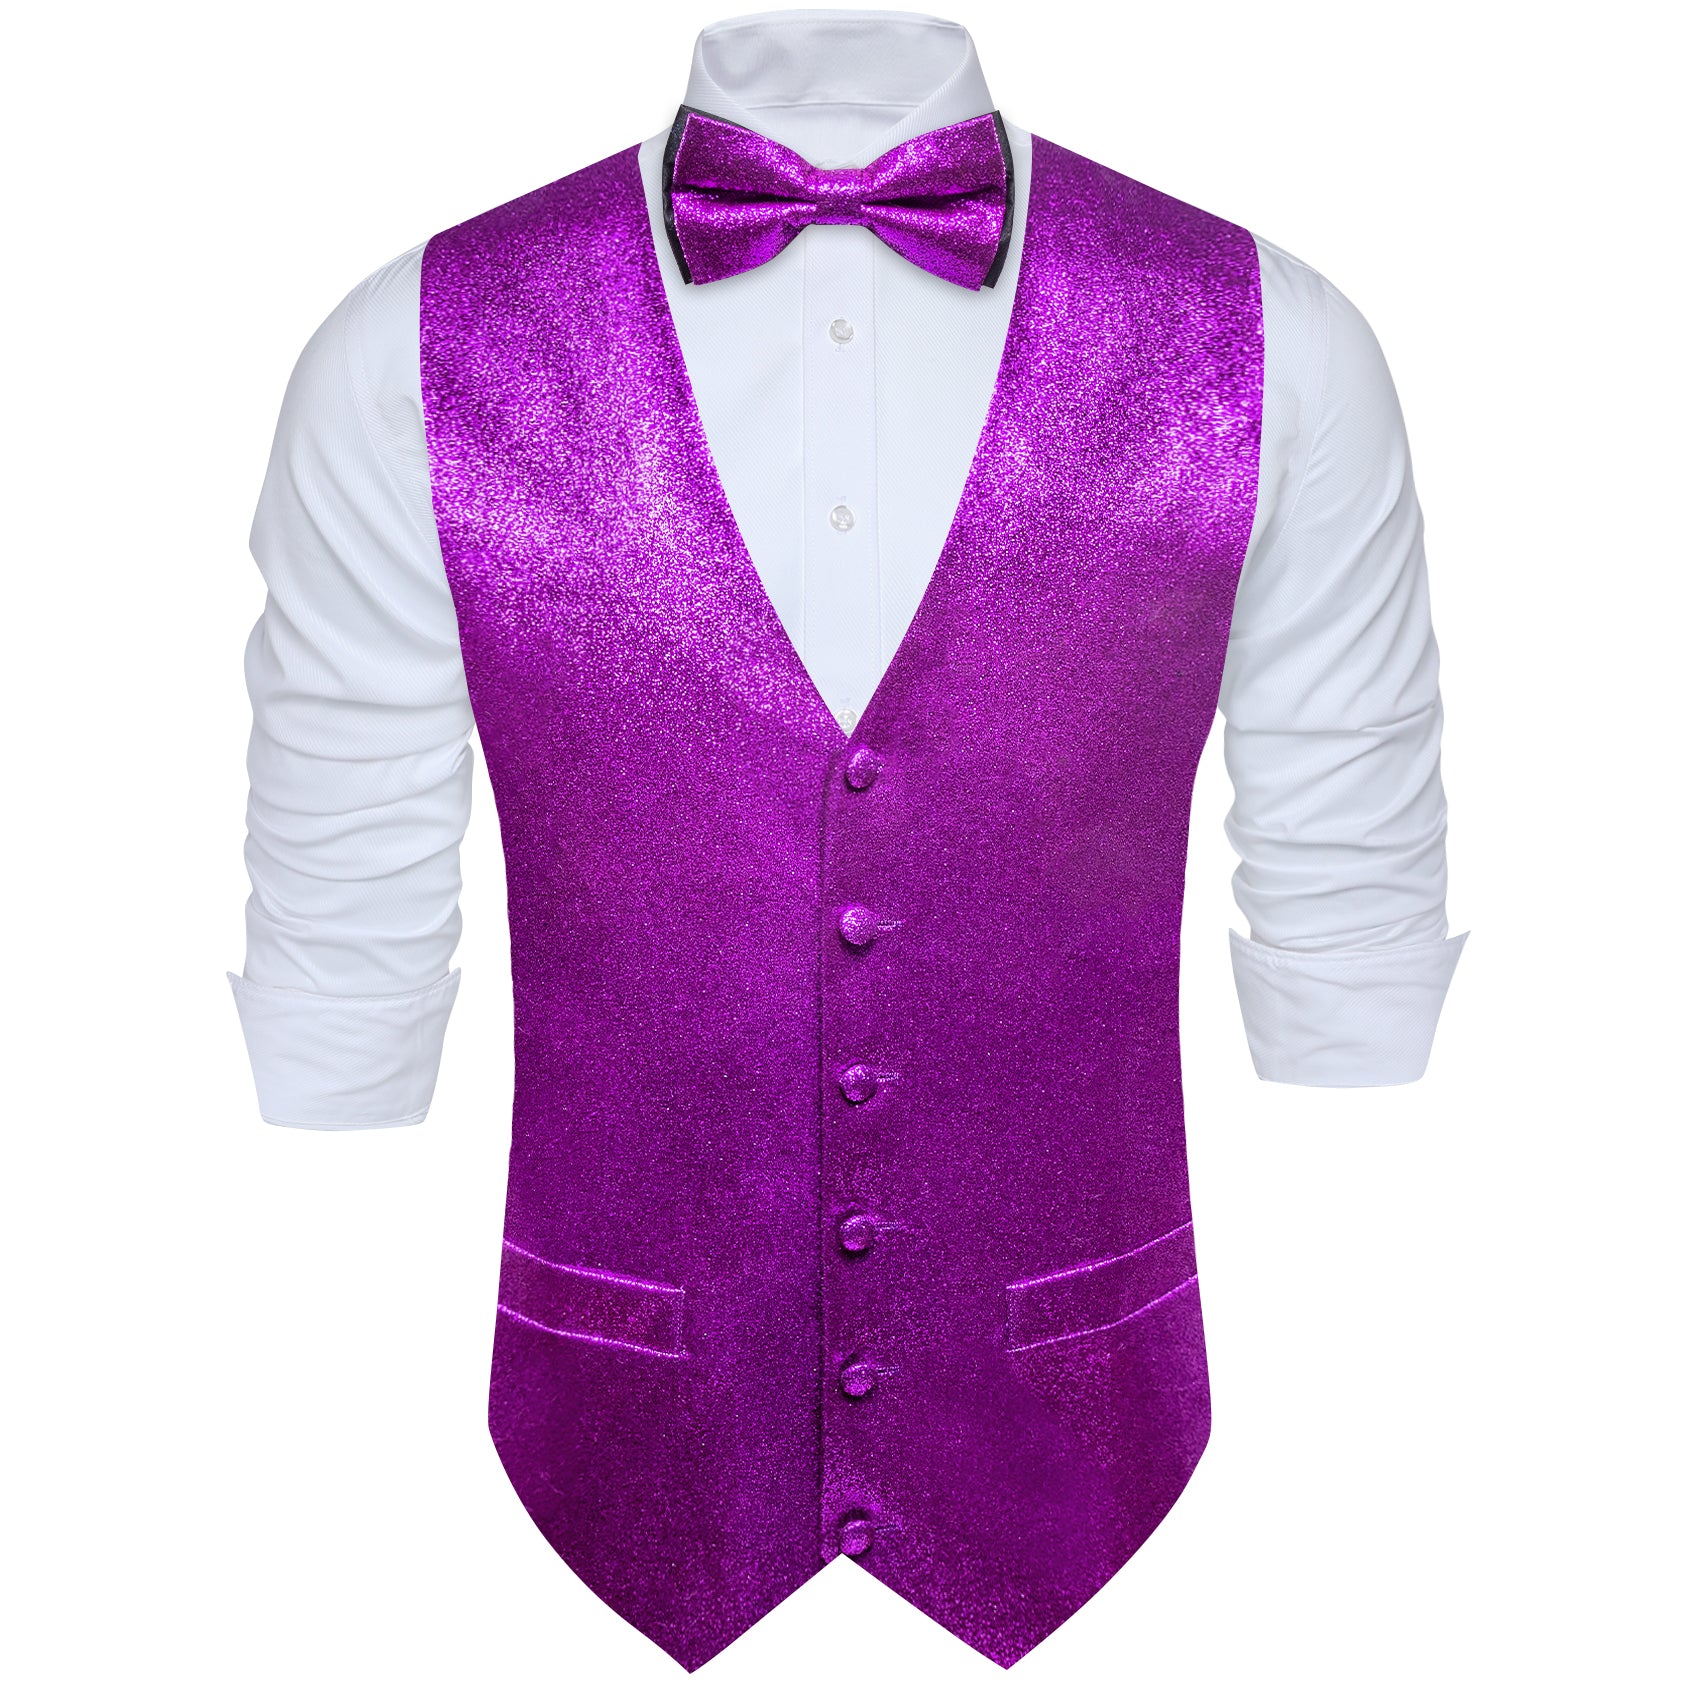 Barry.wang Men's Vest Shining Violet Purple Silk Bowtie V-Neck Waistcoat Vest Set